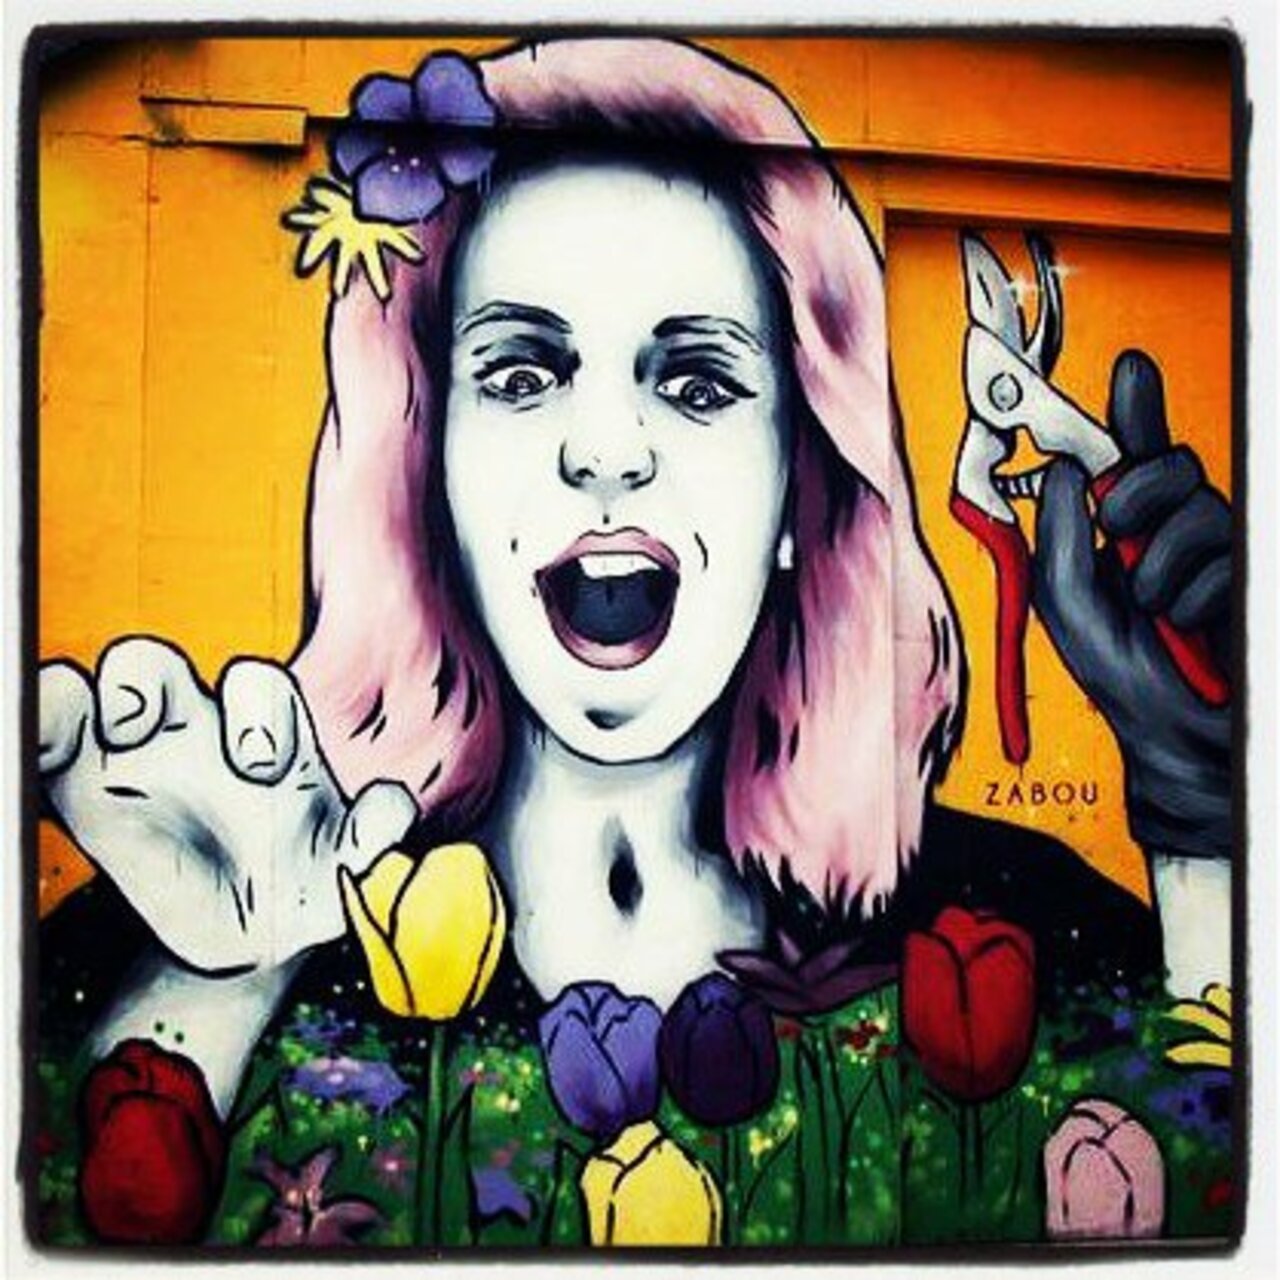 #Paris #graffiti photo by @senyorerre http://ift.tt/1KvqixC #StreetArt https://t.co/X1nUfG2c4K